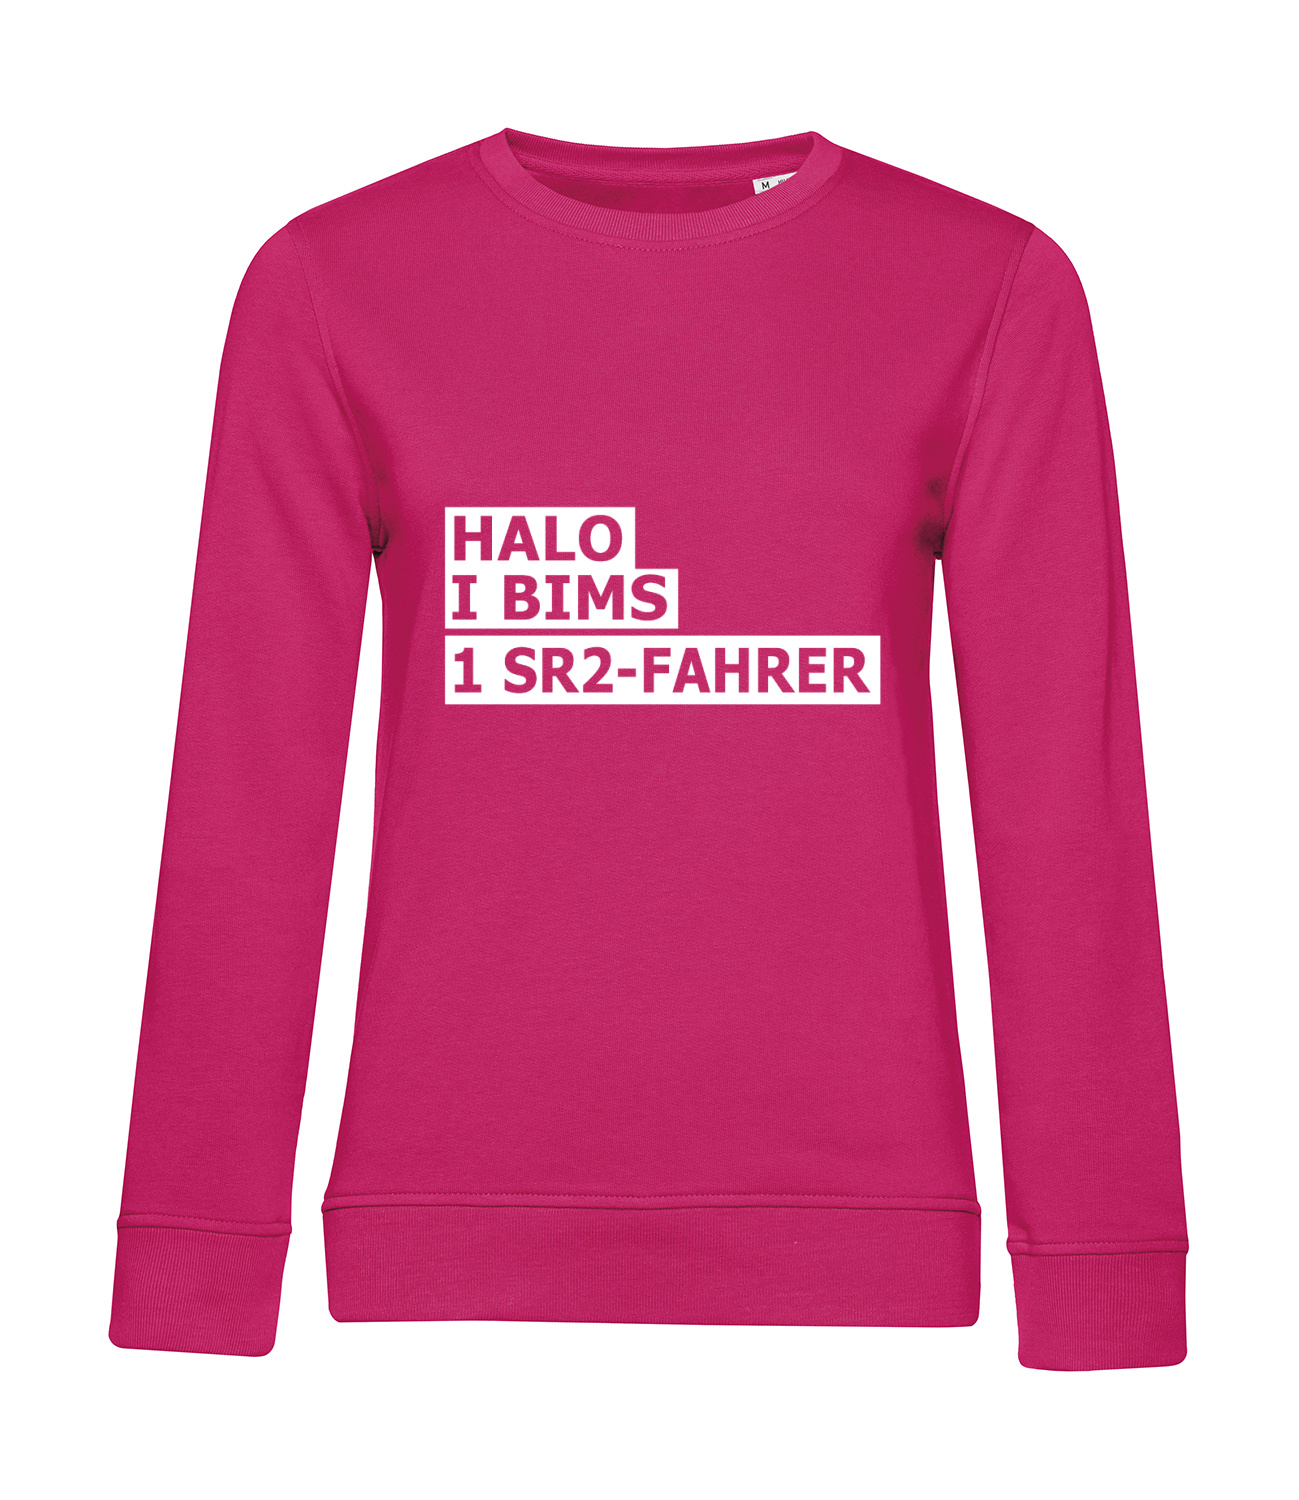 Nachhaltiges Sweatshirt Damen 2Takter - Halo I bims 1 SR2-Fahrer